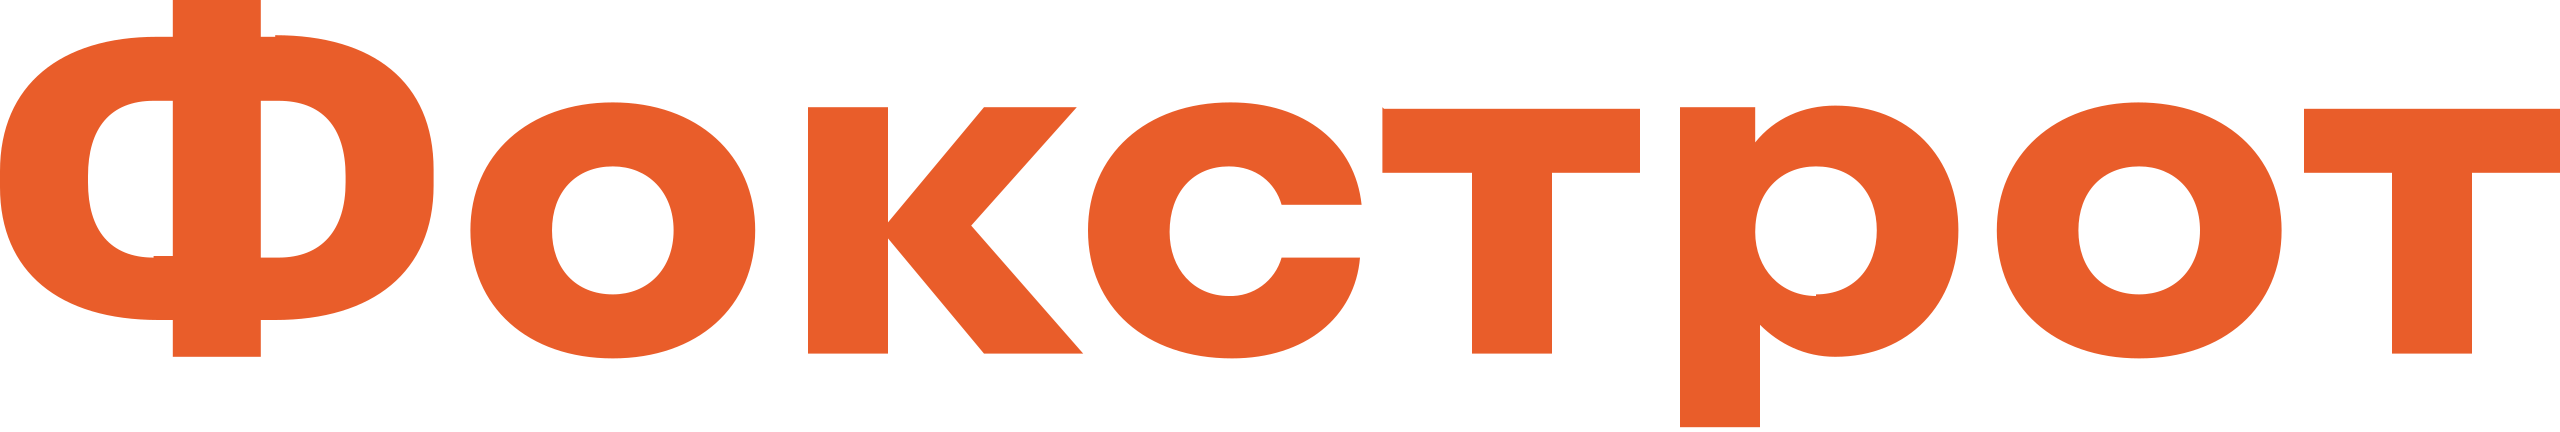 foxtrot logo